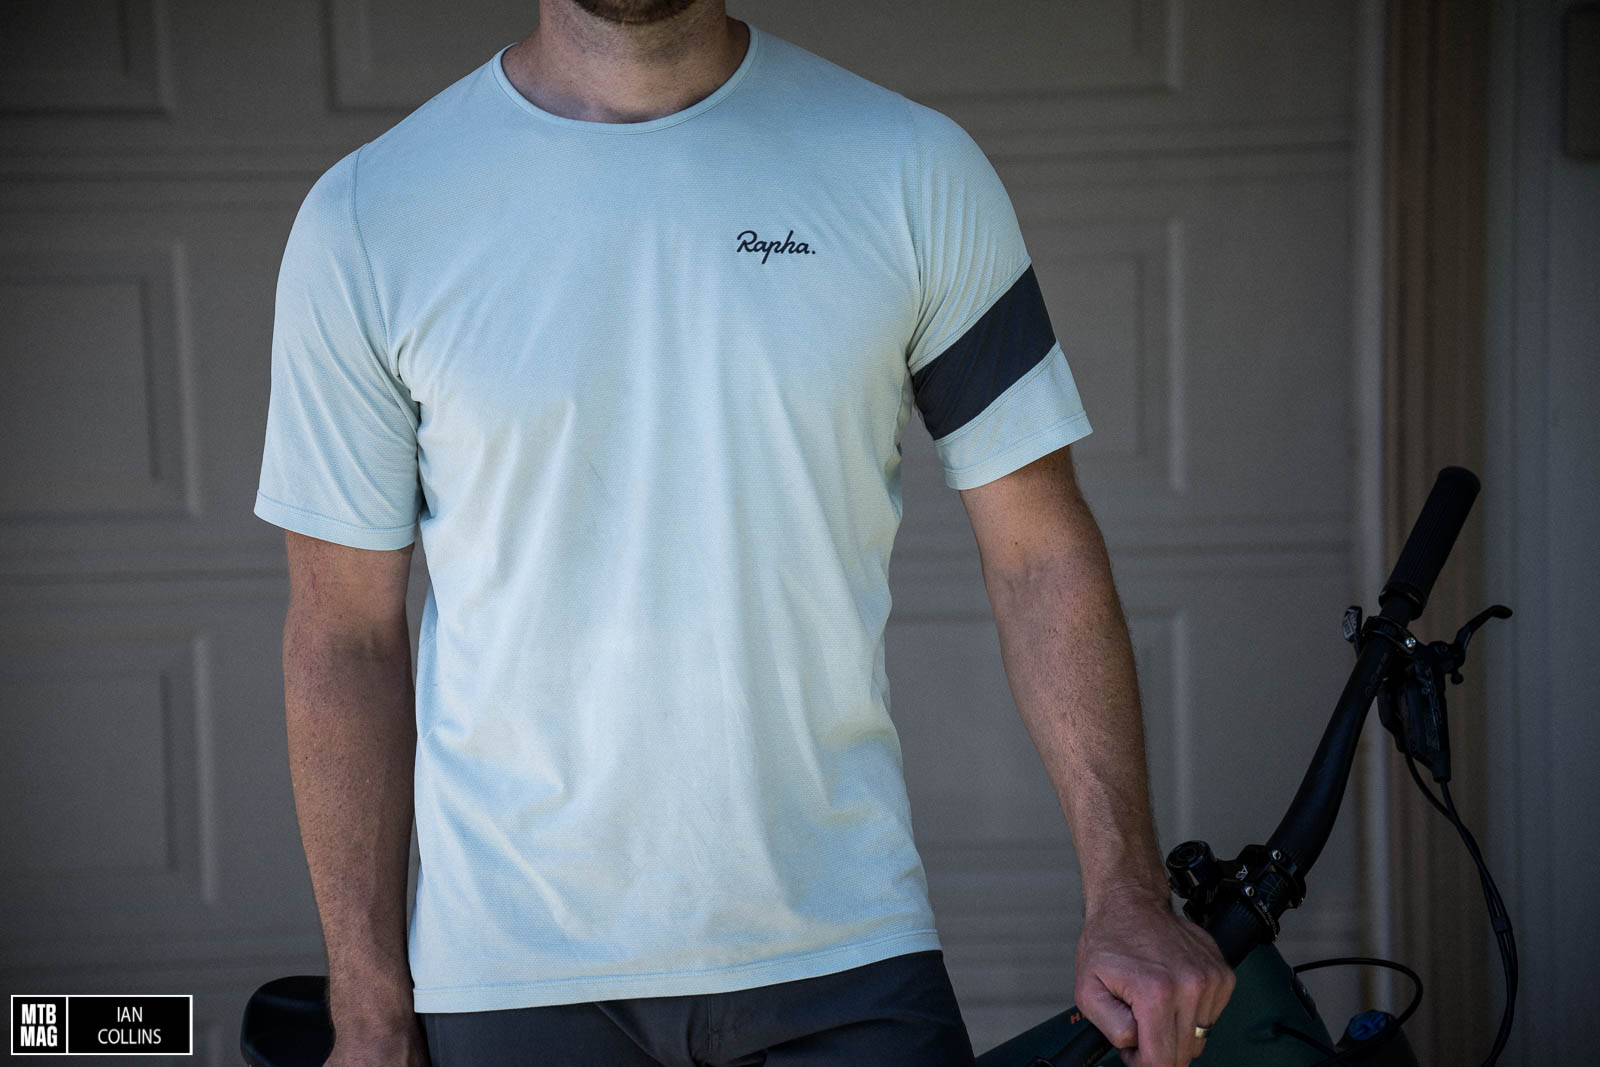 Tested] Rapha Trail Lightweight T-Shirt